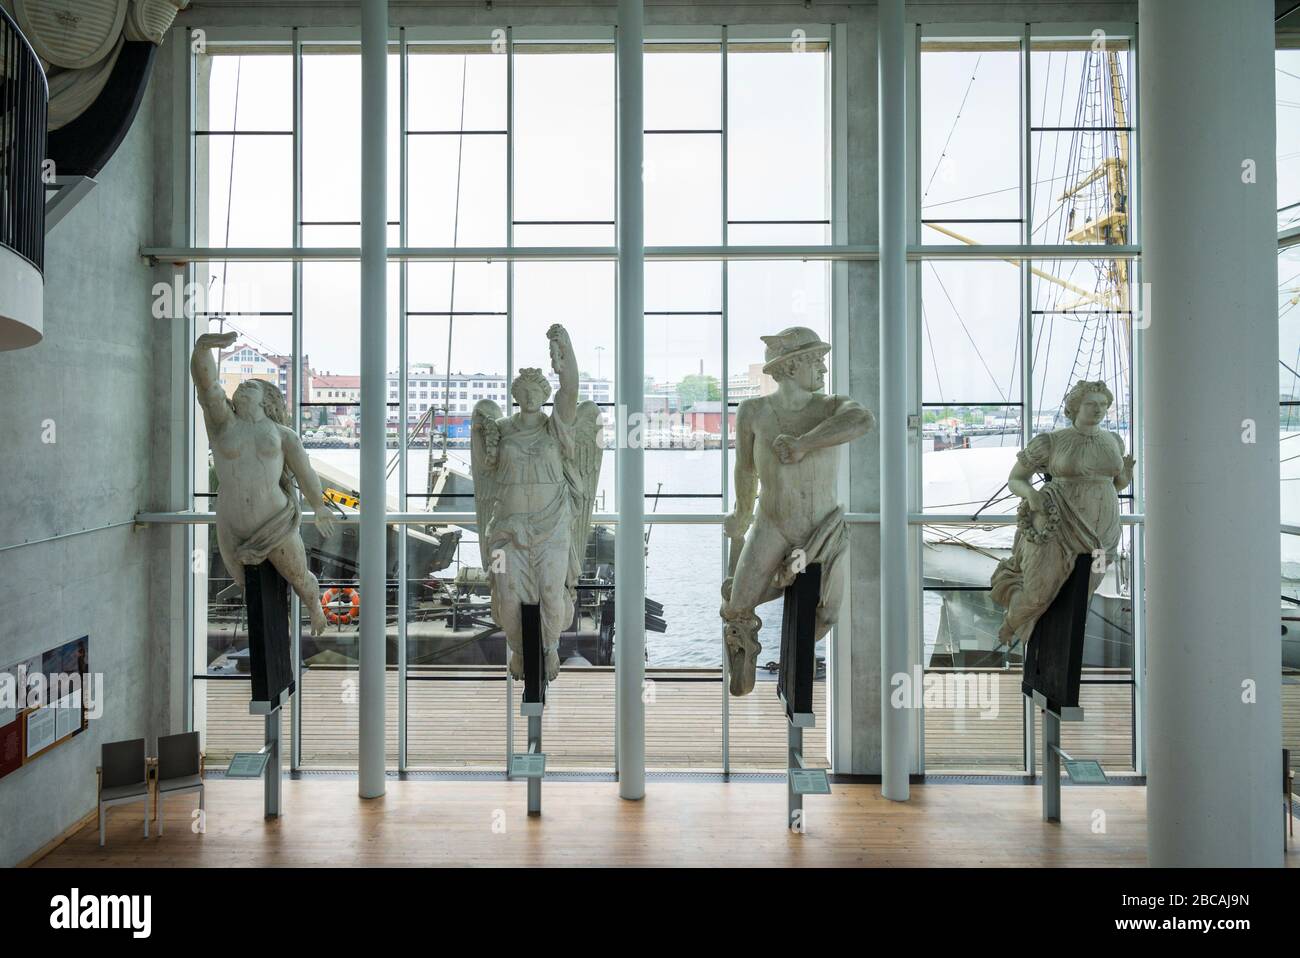 Sweden, Southern Sweden, Karlskrona, Marinmuseum, gallery of ship figureheads Stock Photo